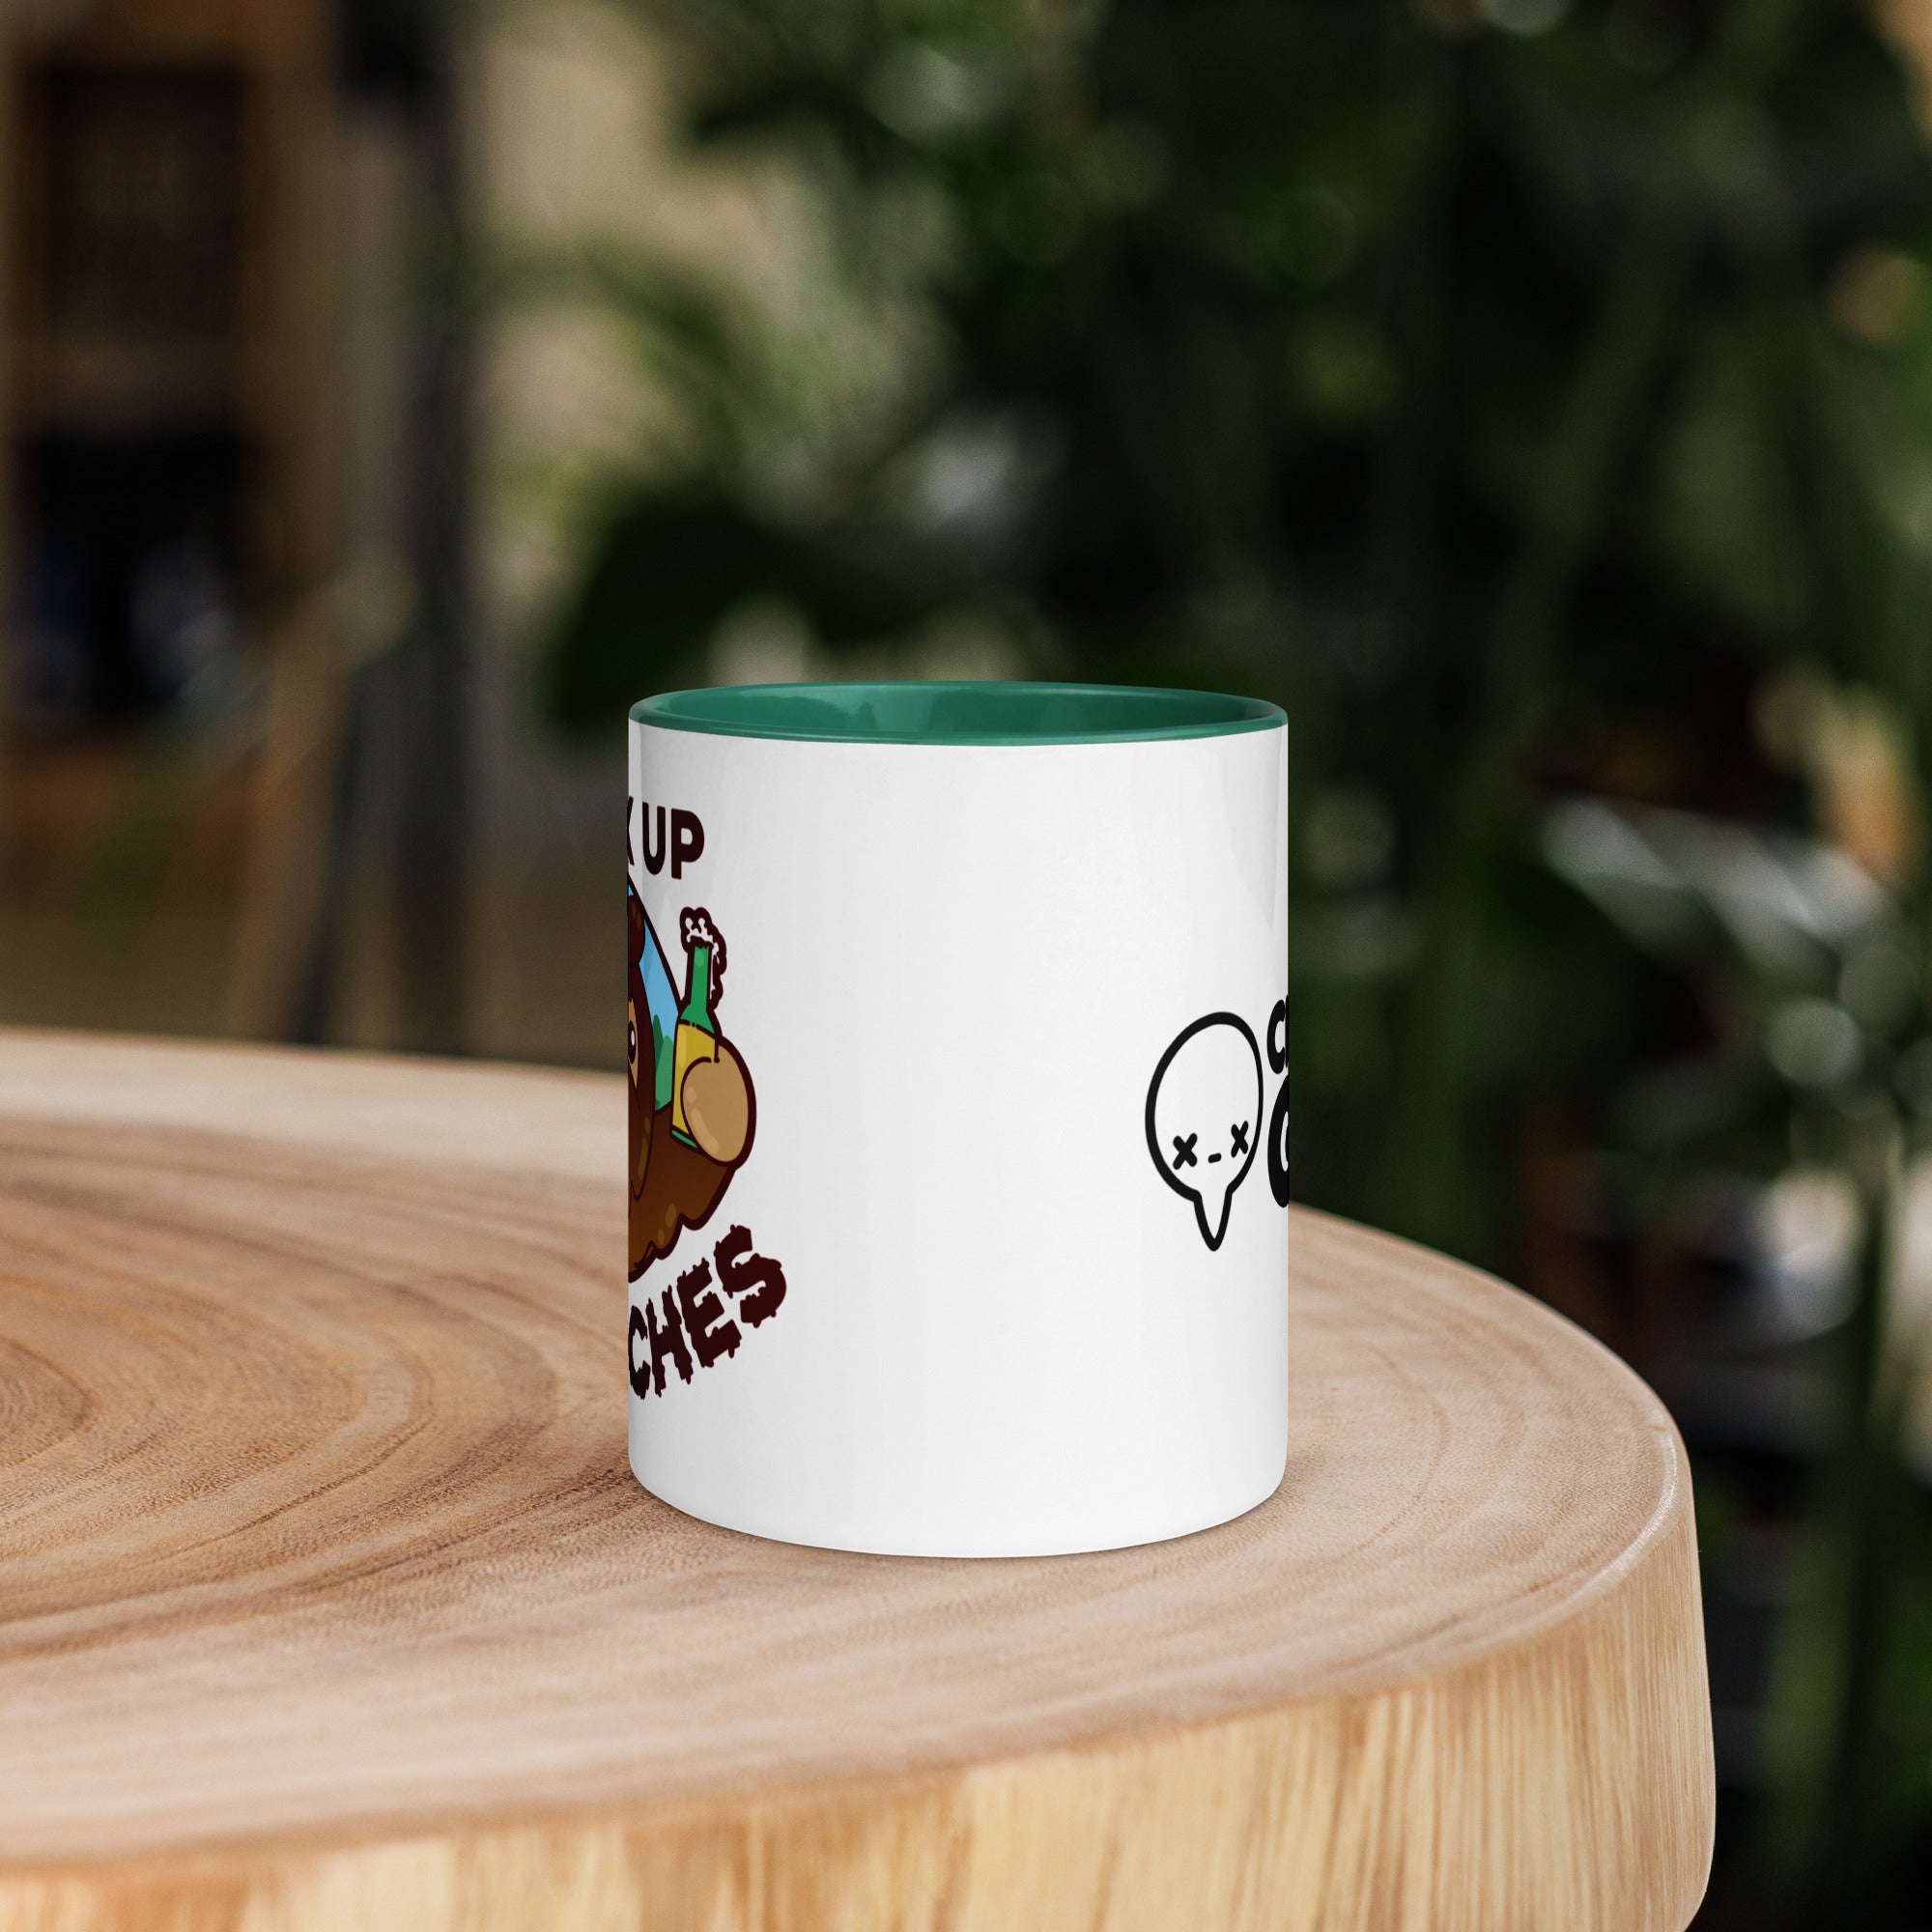 DRINK UP SQUATCHES - Mug with Color Inside - ChubbleGumLLC